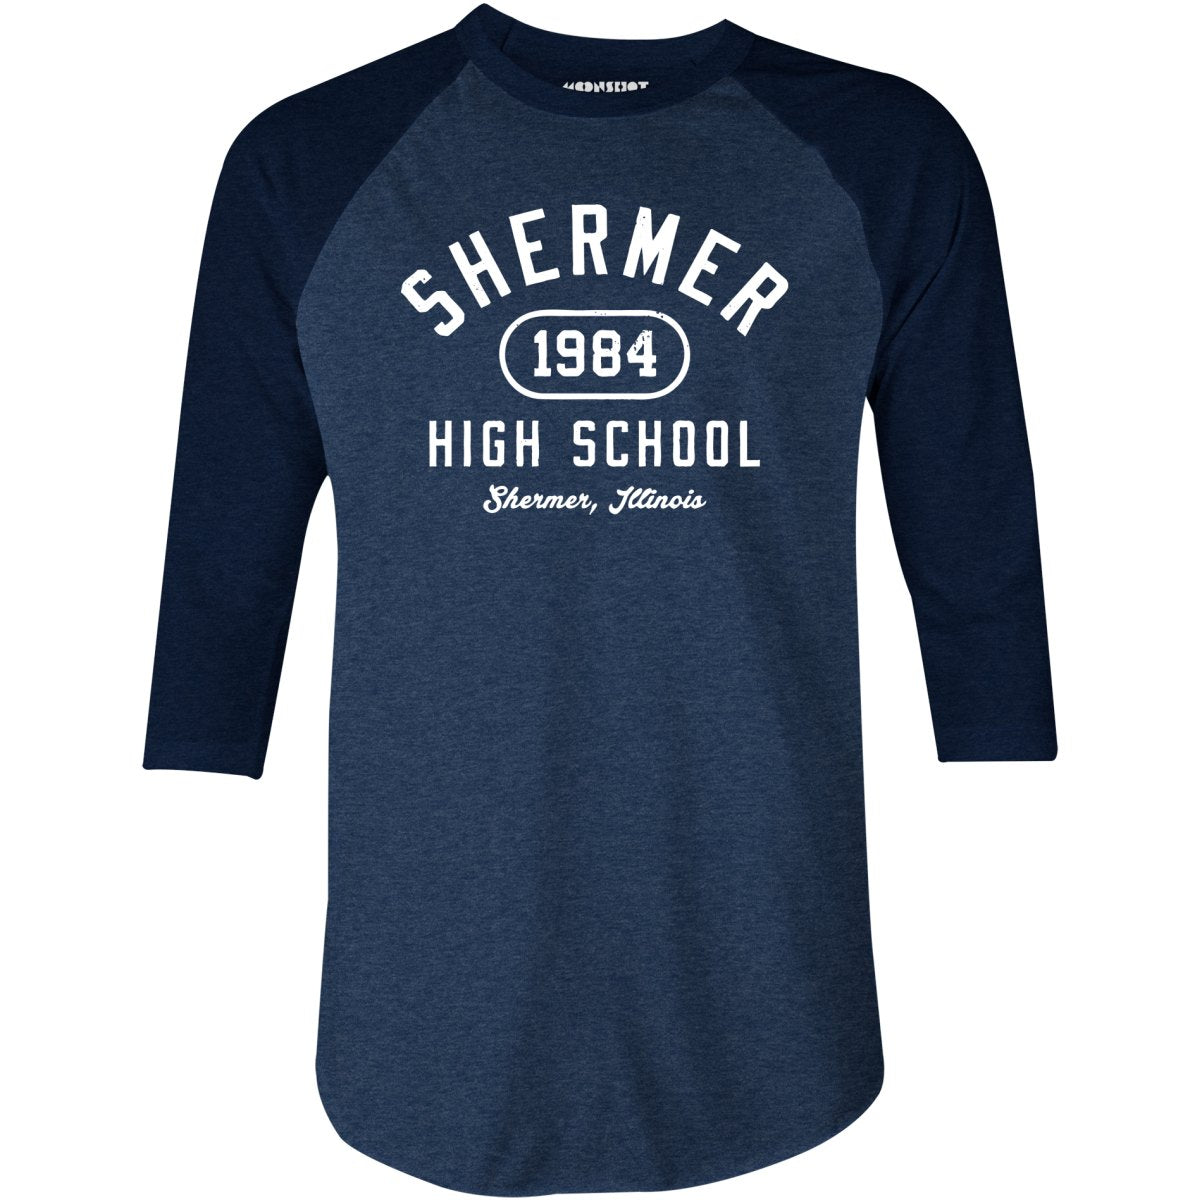 Shermer High School 1984 - 3/4 Sleeve Raglan T-Shirt